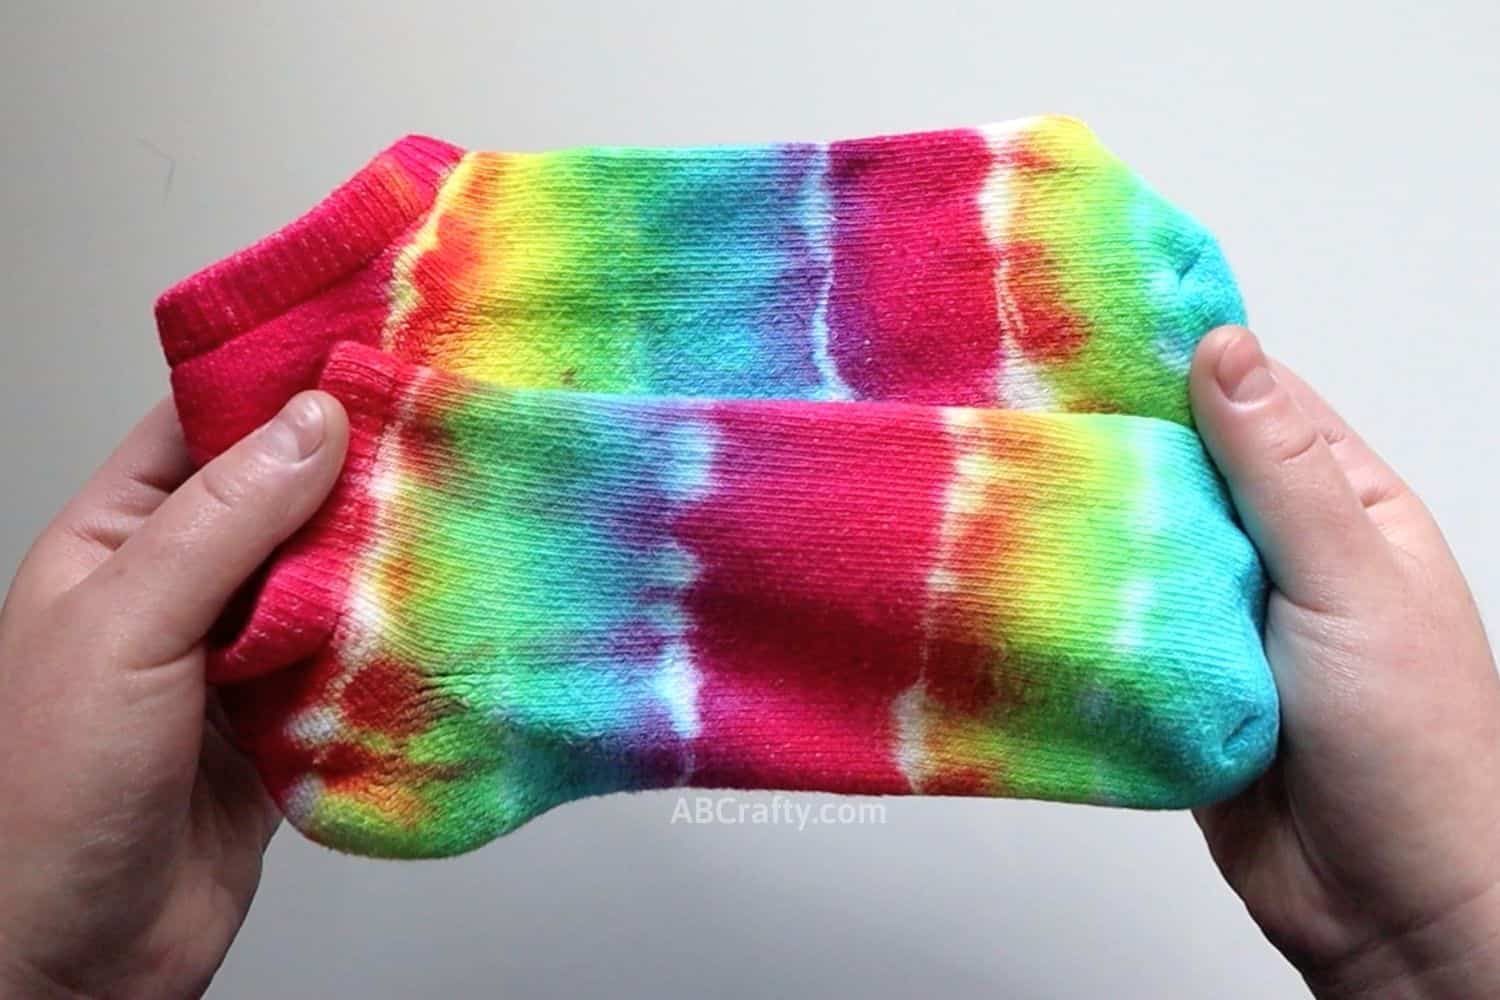 Tie Dye Socks - Easy Instructions to Tie Dye Socks at Home - AB Crafty